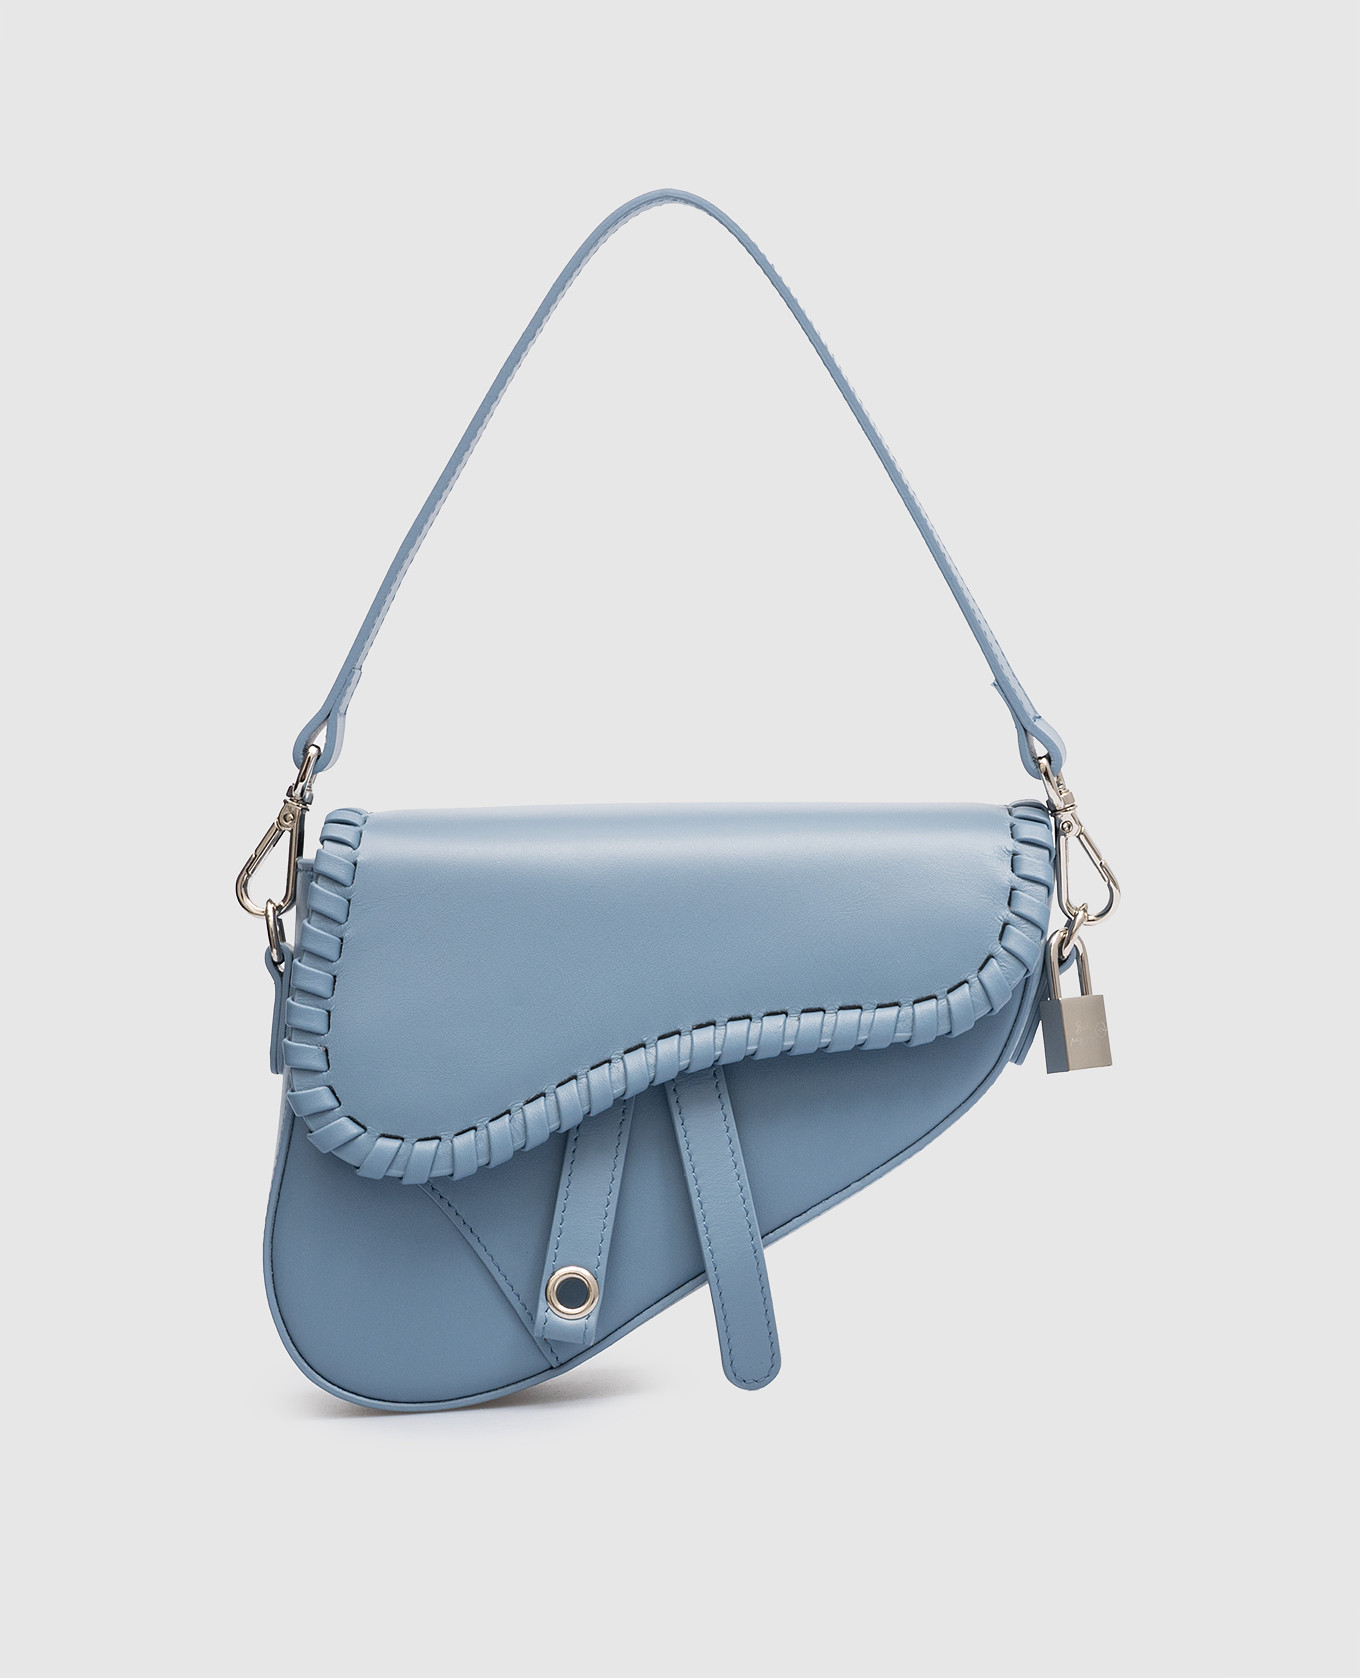 Blue leather saddle bag